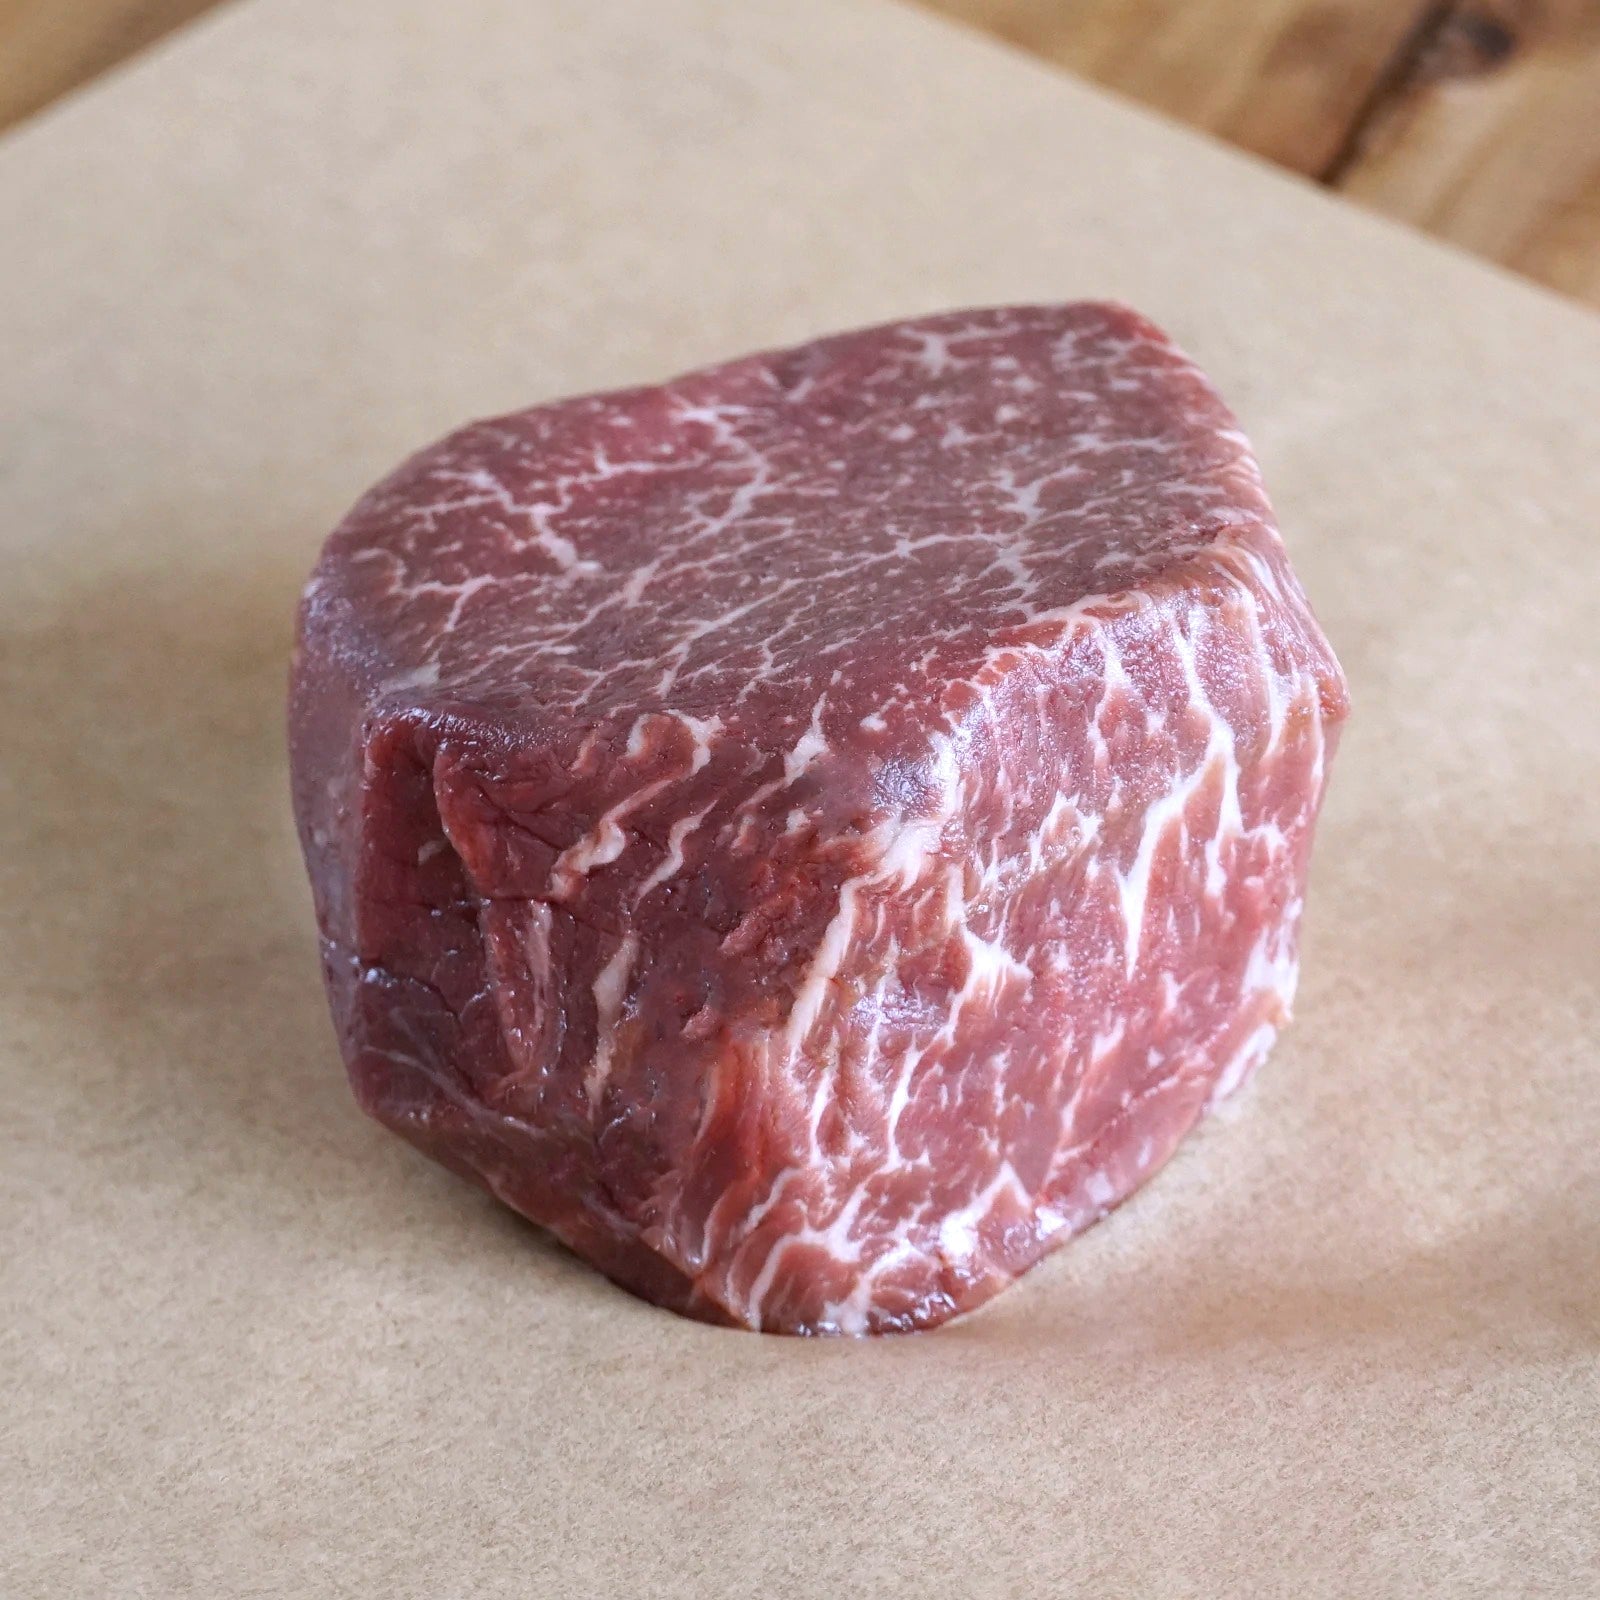 Premium Grain-Fed Beef MB5+ Filet Steak from Australia 200g 10-Pack (2kg) - Horizon Farms